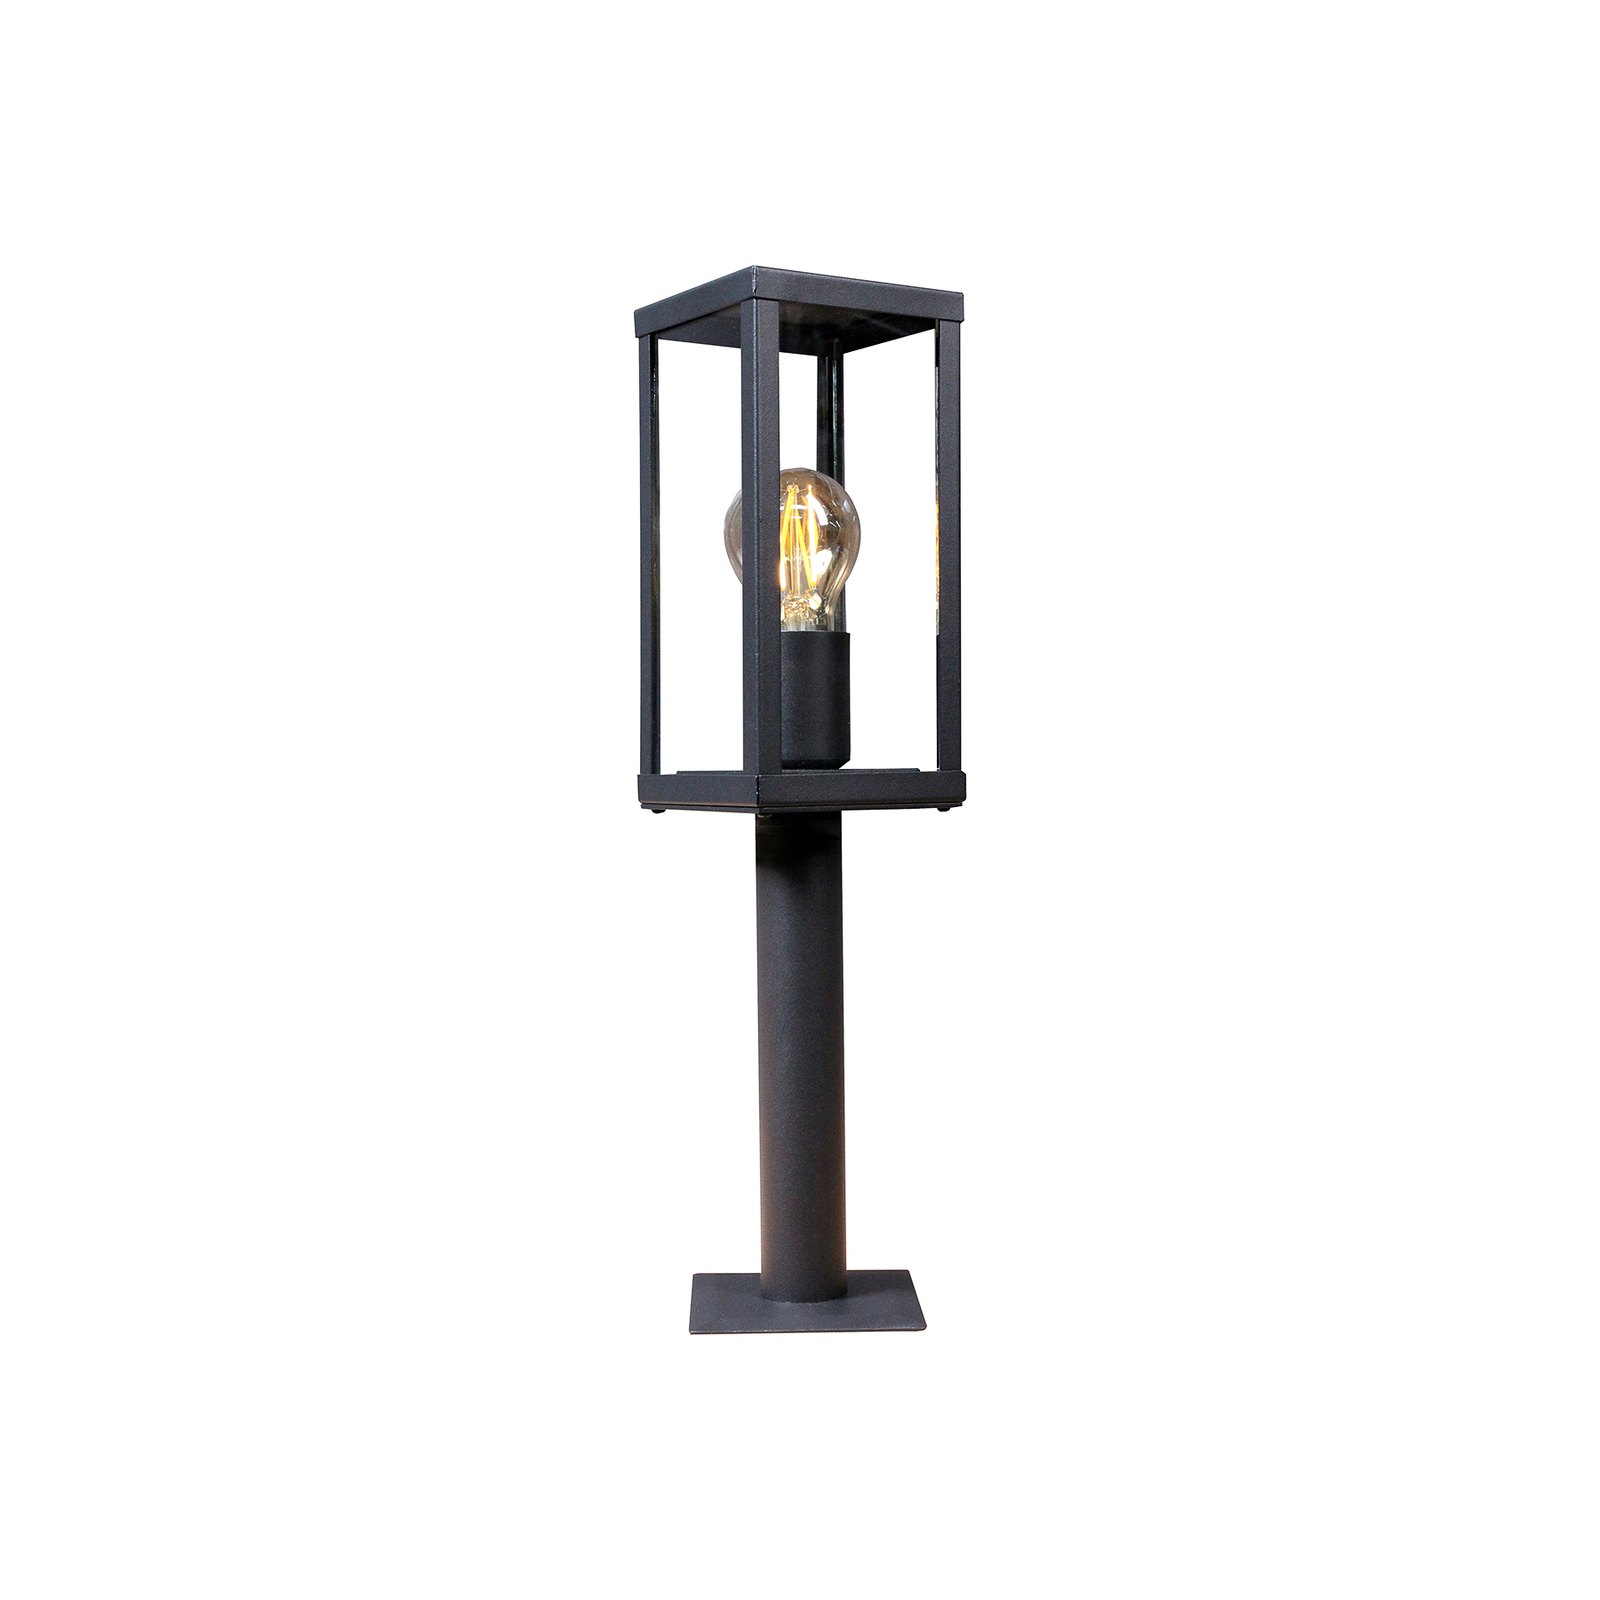 Sokkellamp Karo, 55 cm, houtdecor